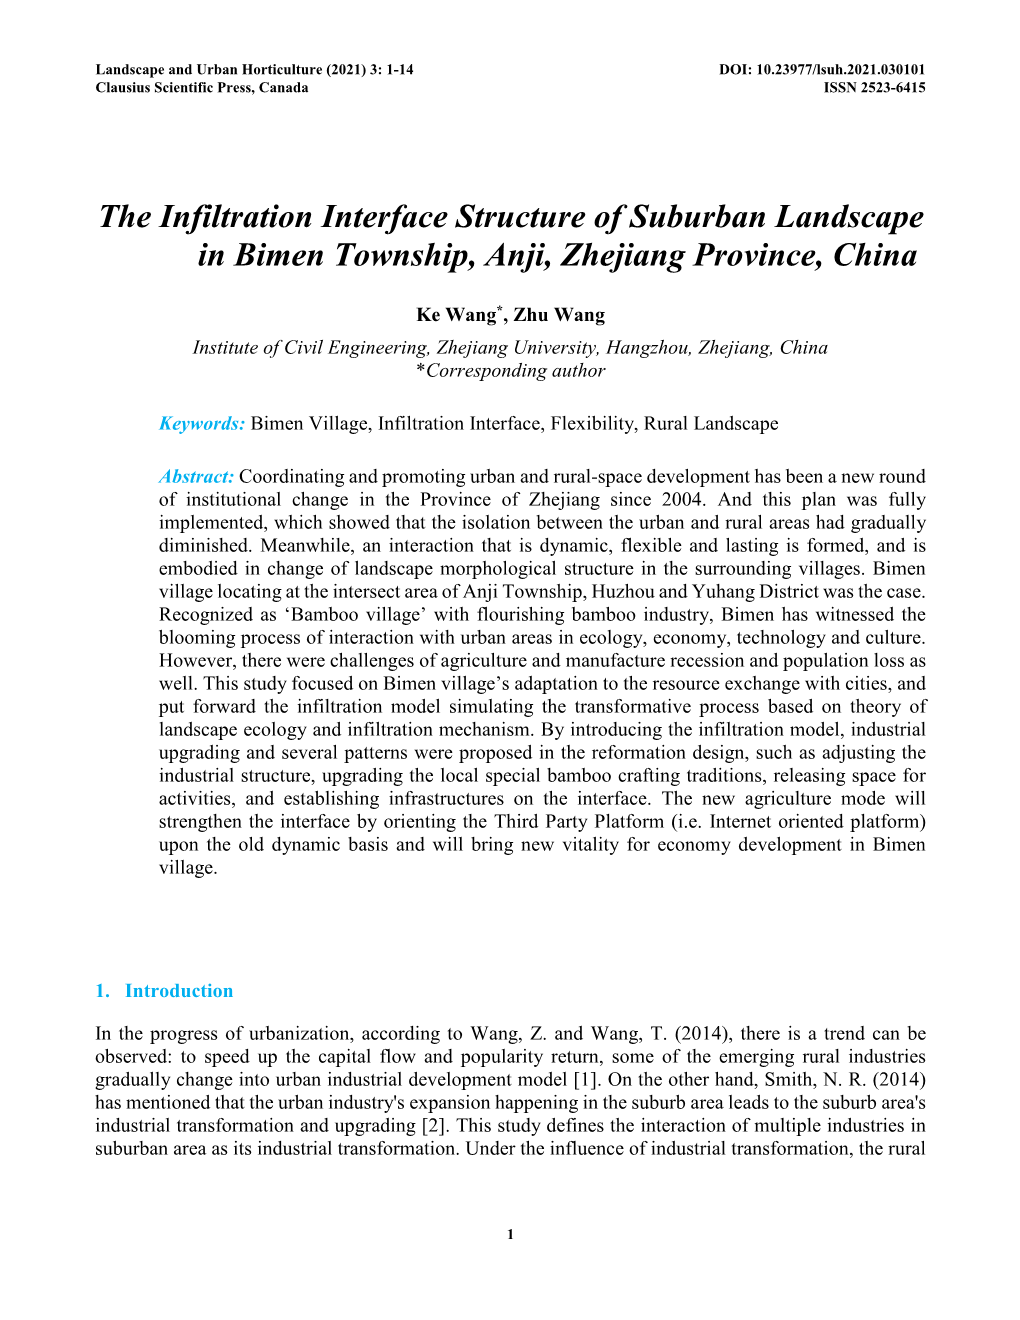 The Infiltration Interface Structure of Suburban Landscape in Bimen Township, Anji, Zhejiang Province, China